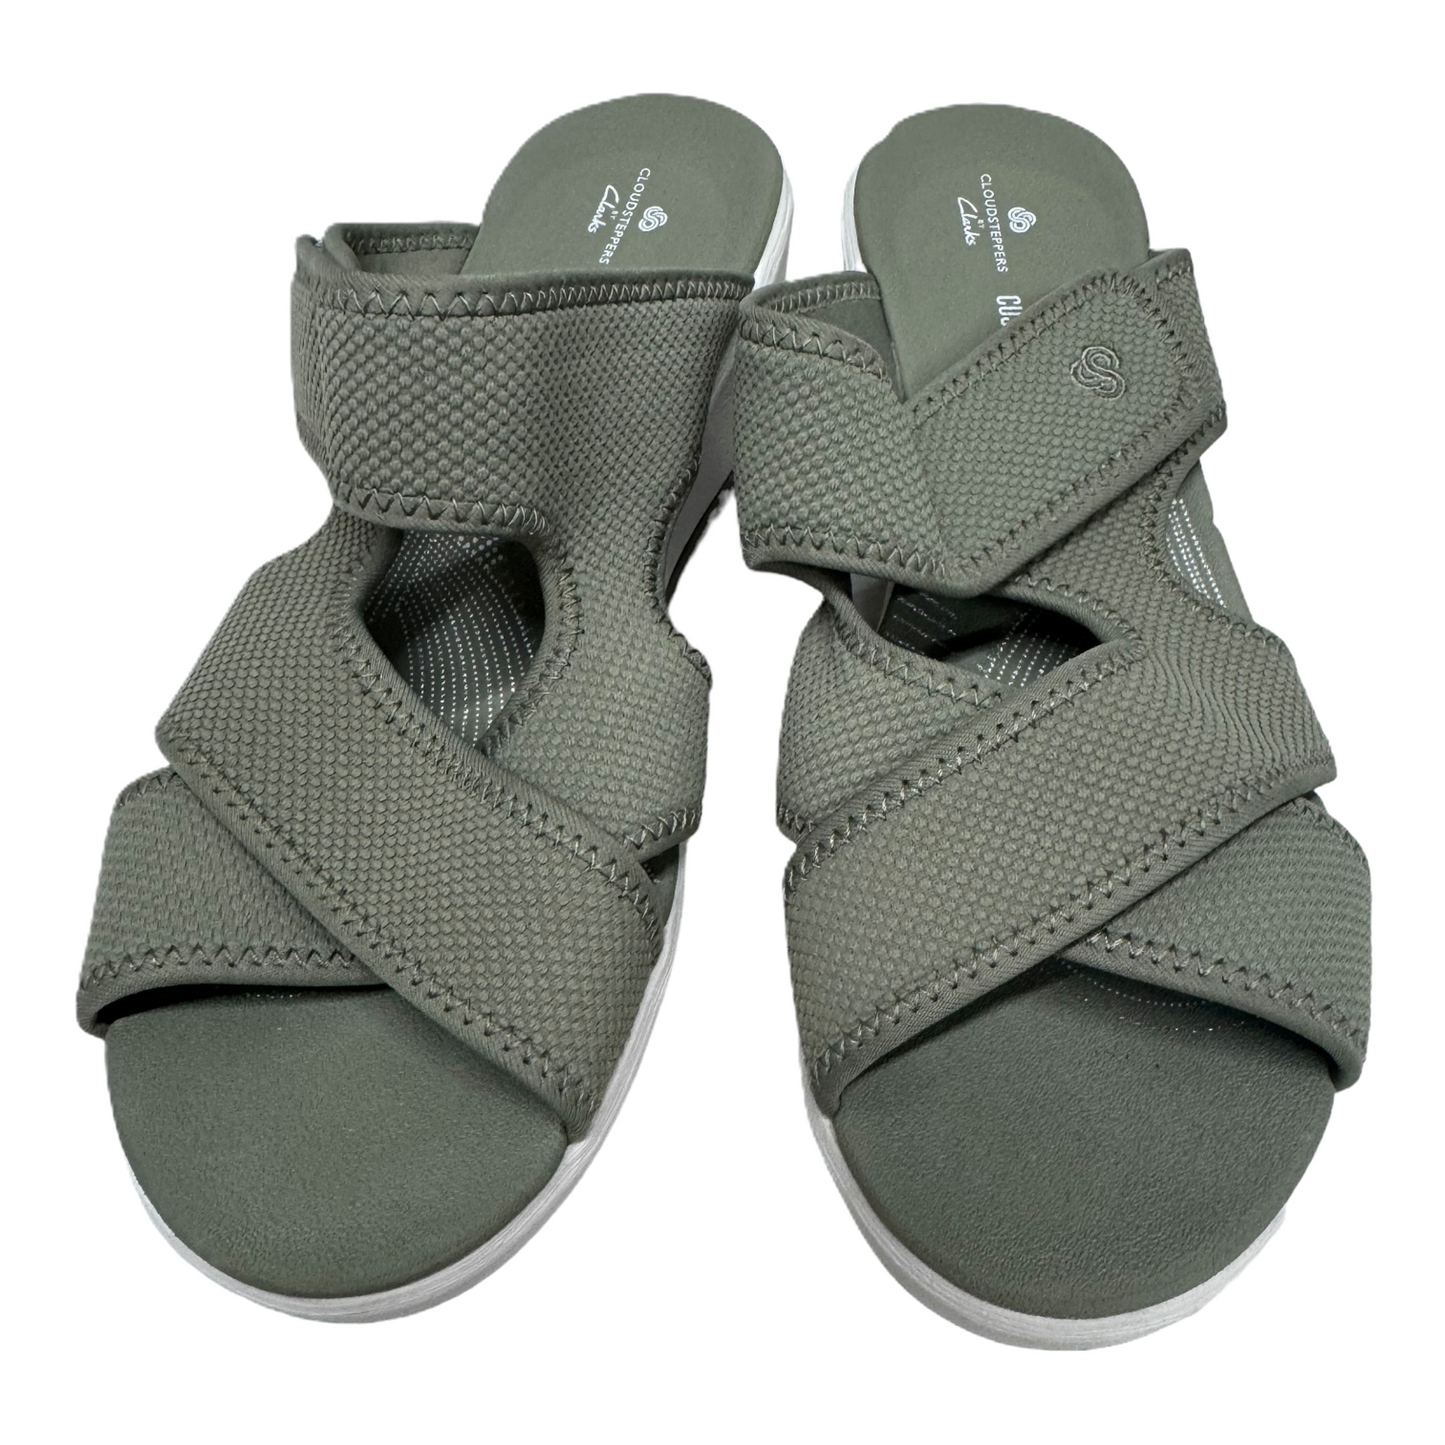 Sandals Heels Platform By Clarks  Size: 9.5